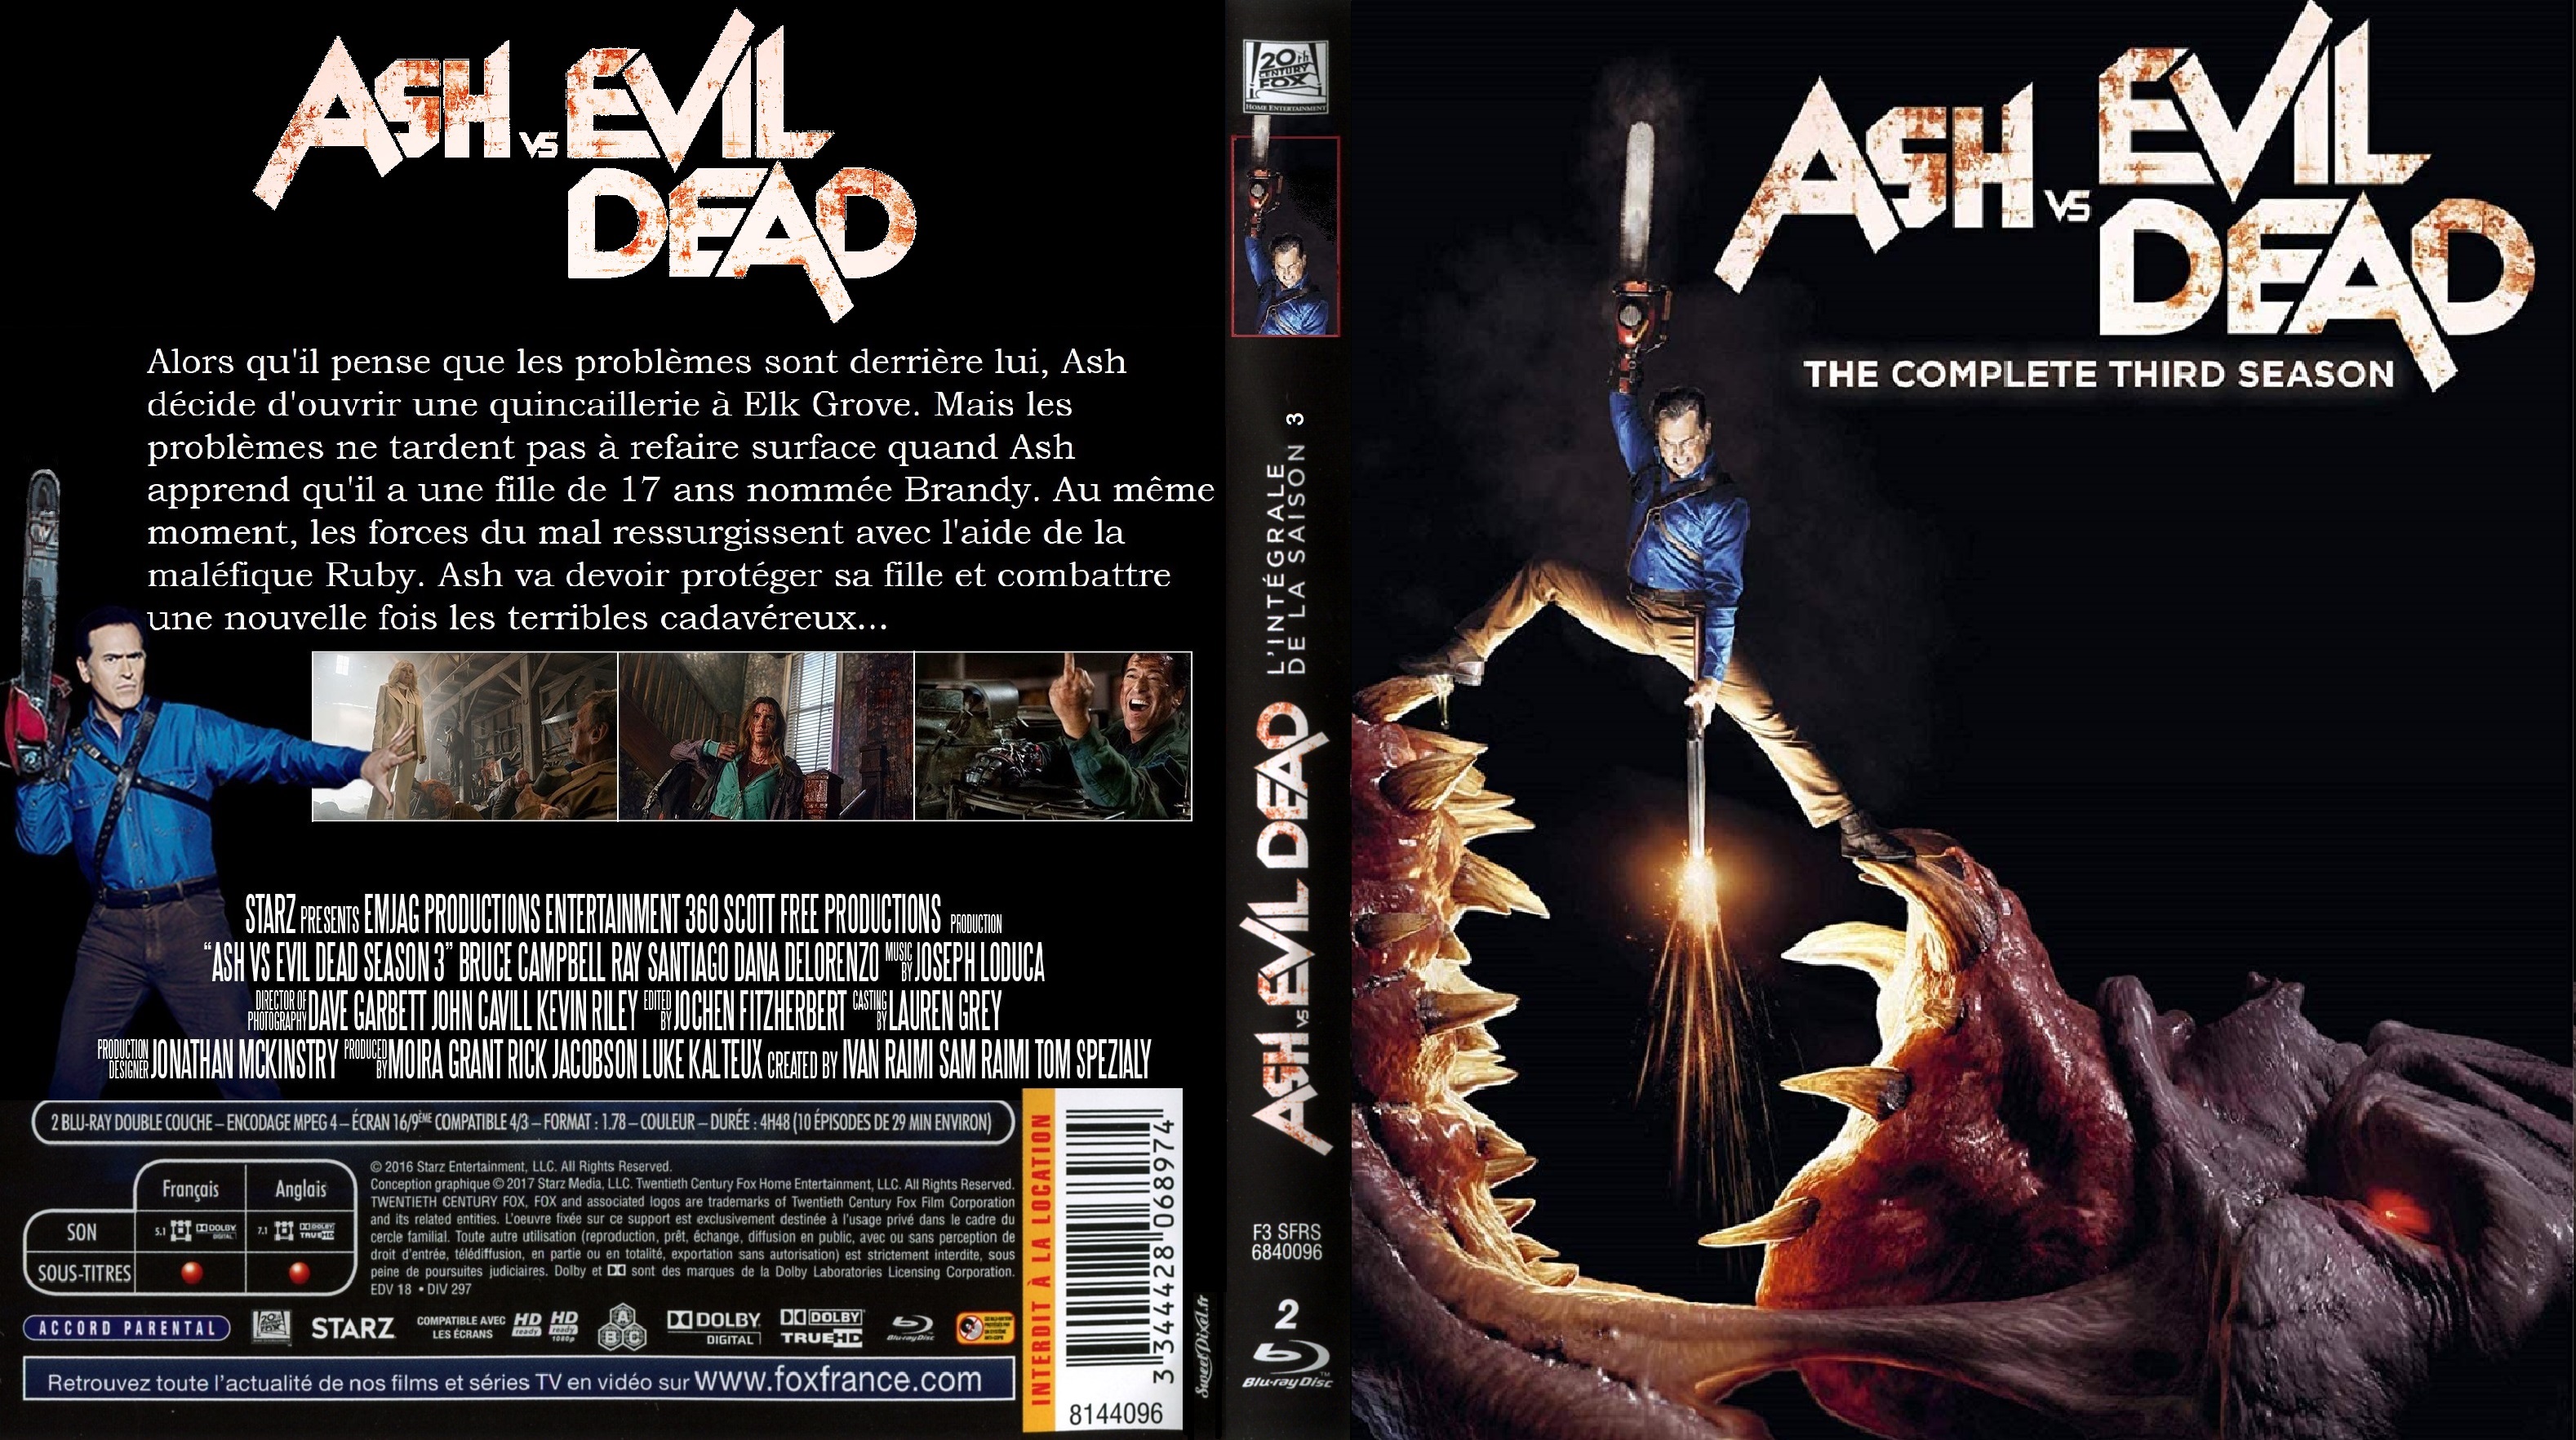 Jaquette DVD Ash vs Evil dead Saison 3 custom (BLU-RAY) v2